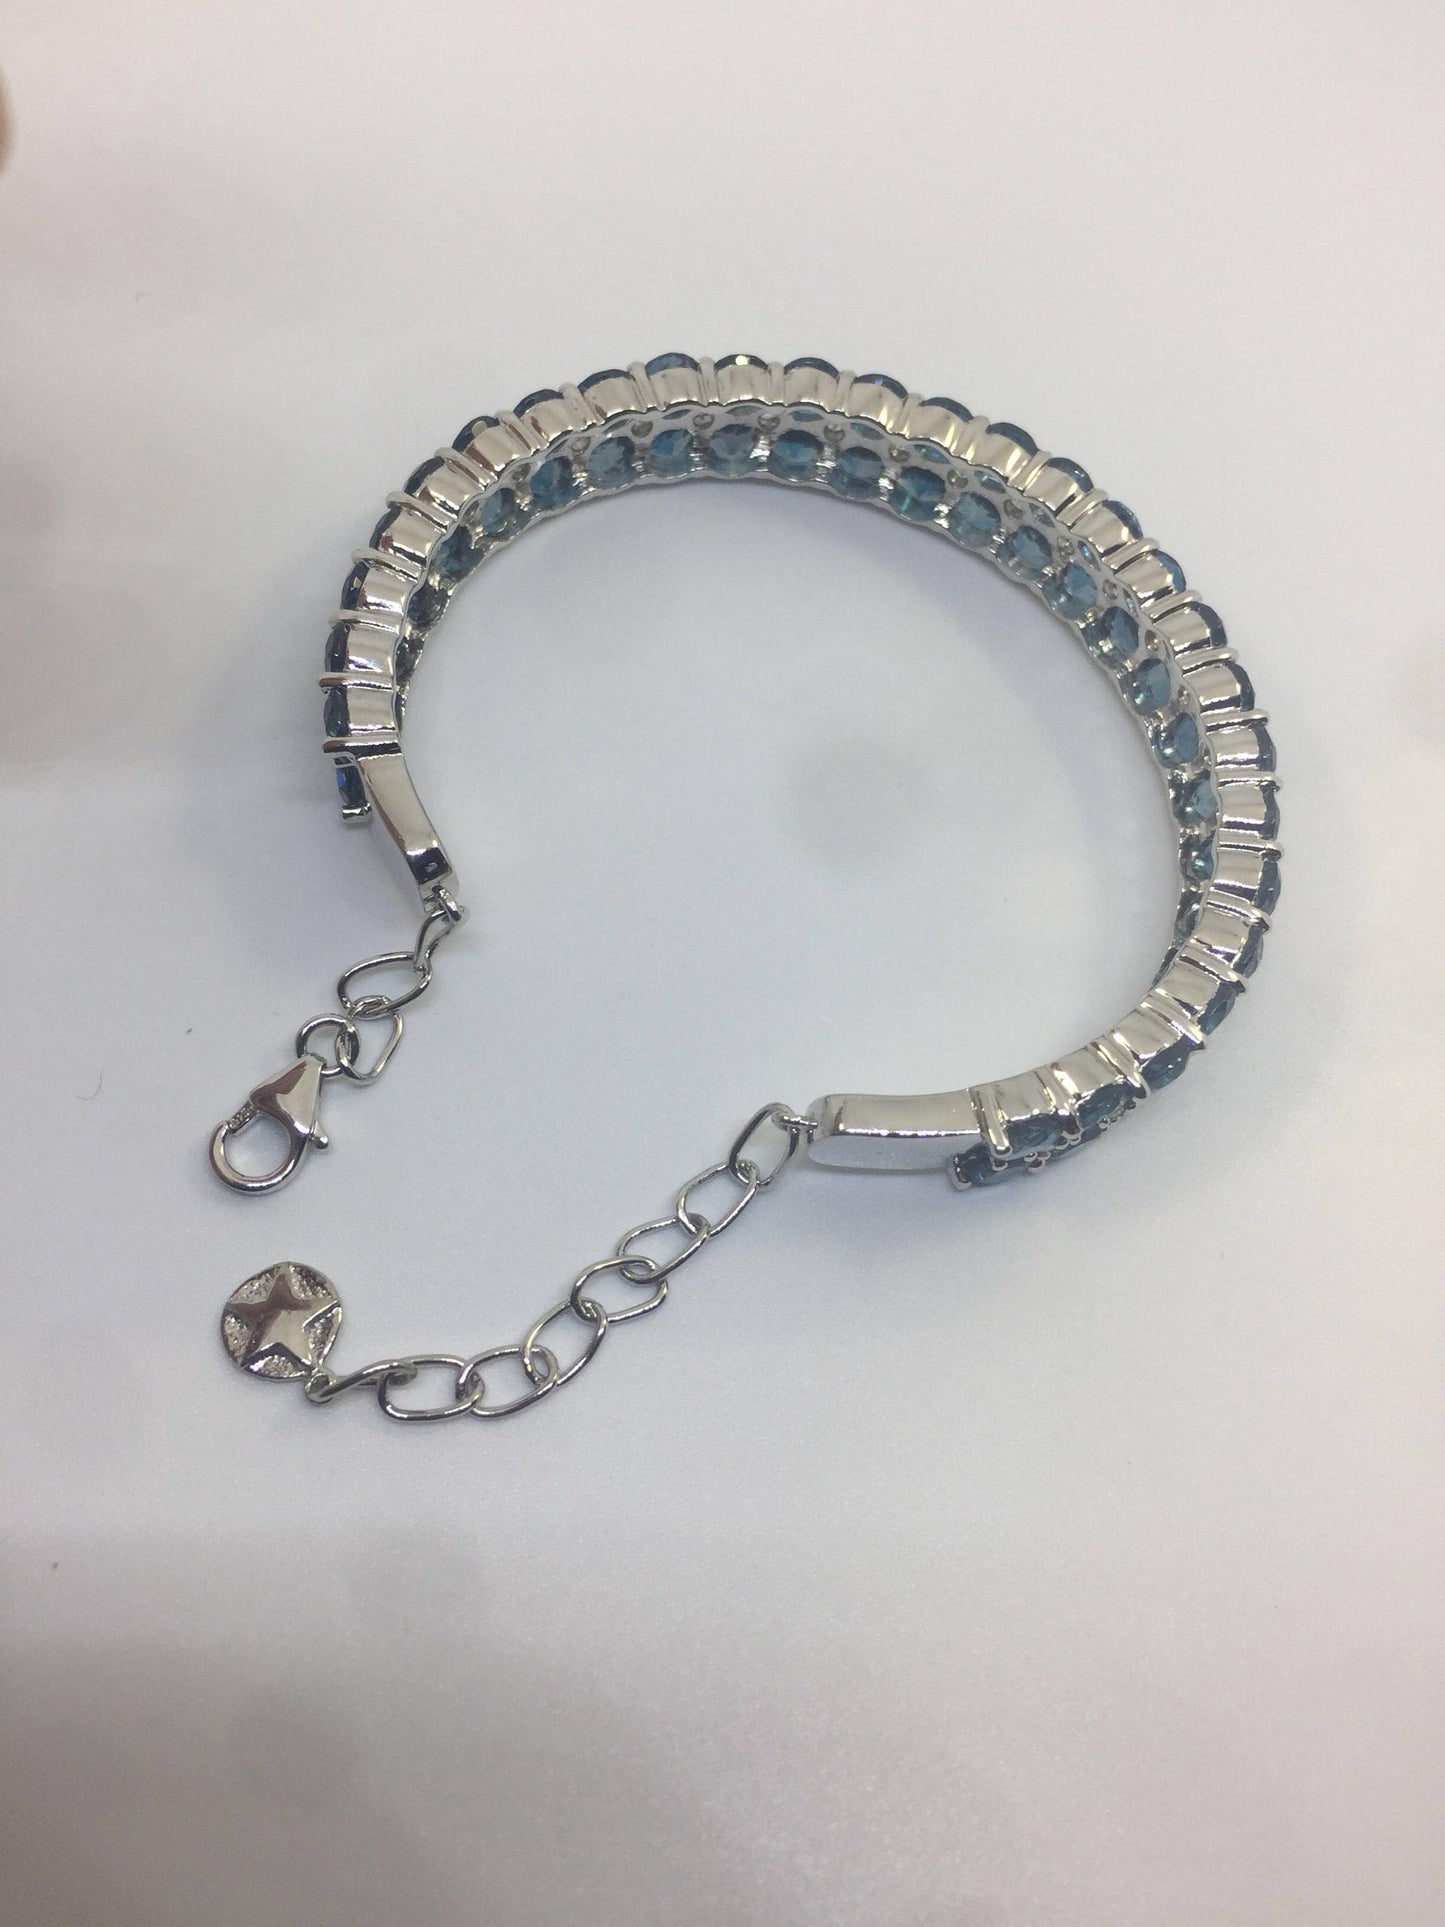 Handmade Genuine Blue Topaz 925 Sterling Silver Bangle Bracelet